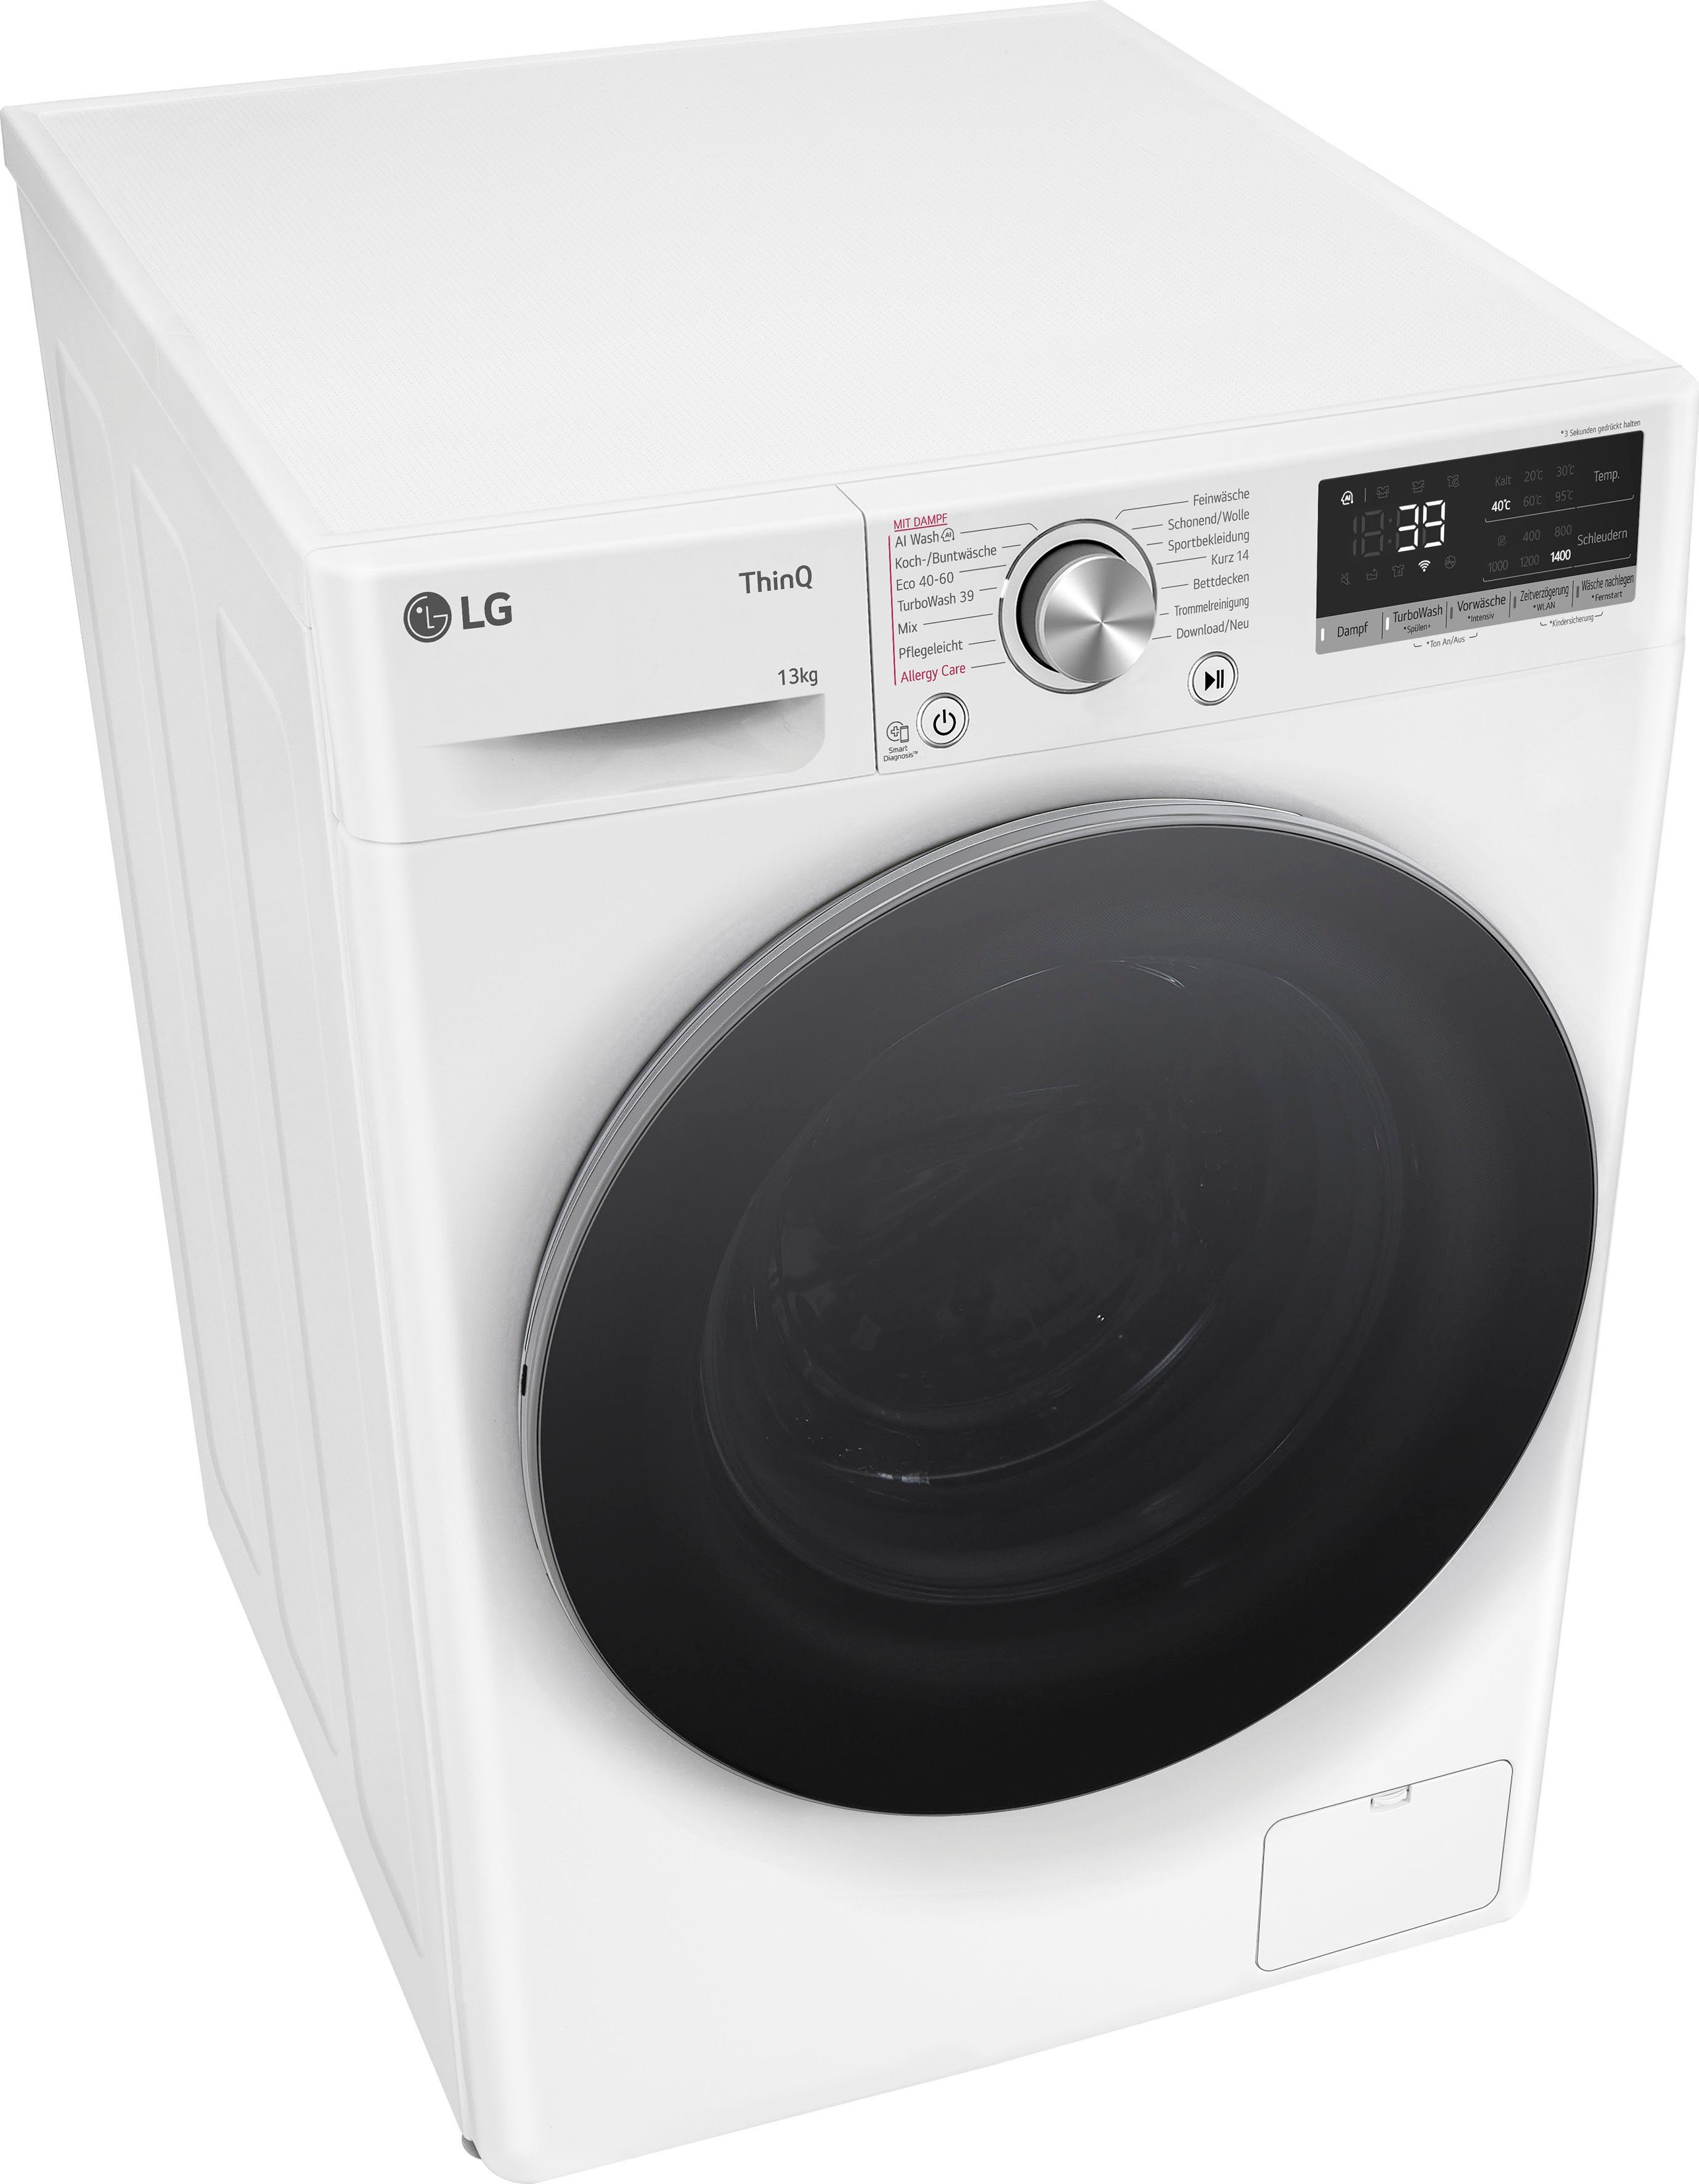 LG Waschmaschine Serie 7 13 kg, F4WR7031, 1400 U/min